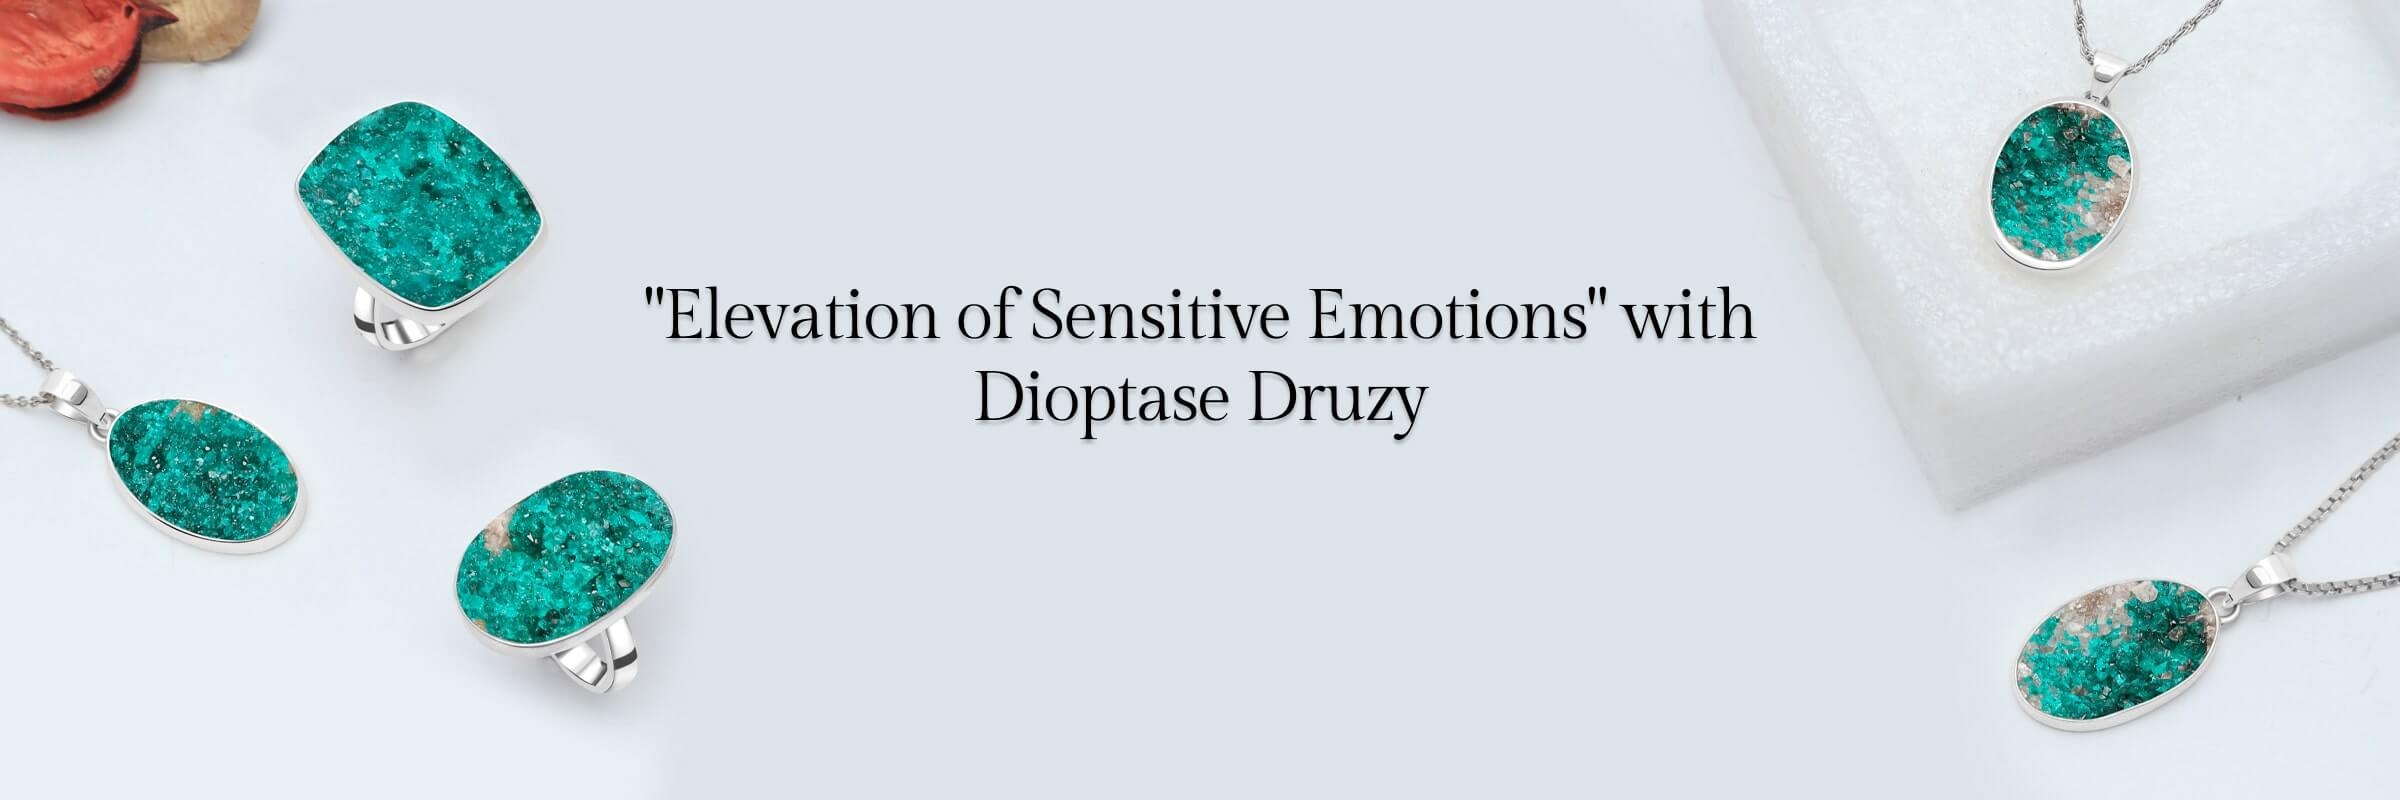 Dioptase Druzy Usage